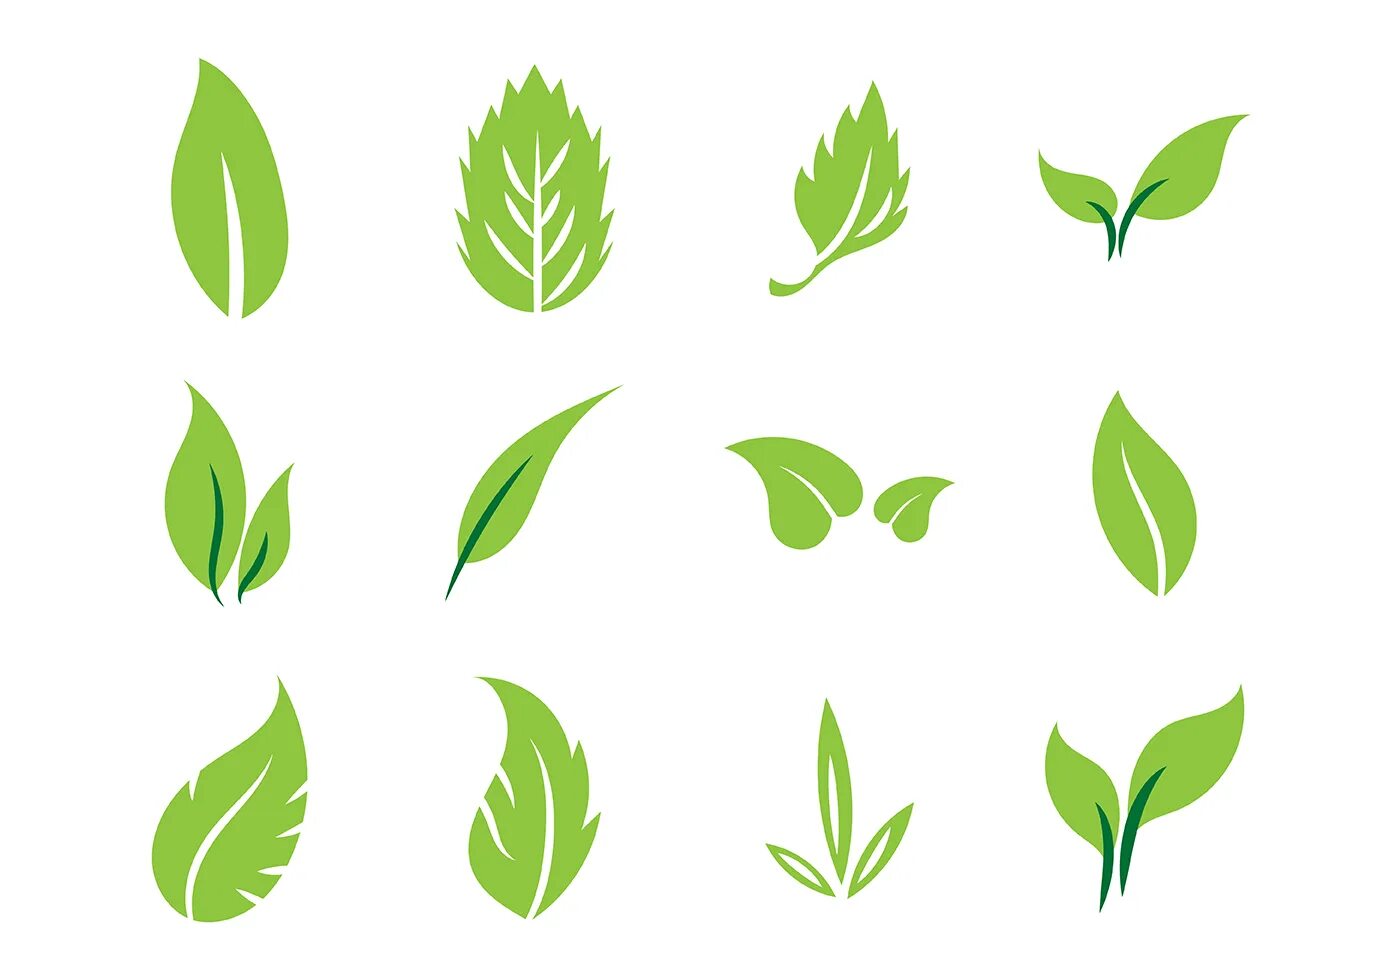 Leaves icon. Векторные листья. Векторные листочки. Листья вектор. Зеленый лист вектор.